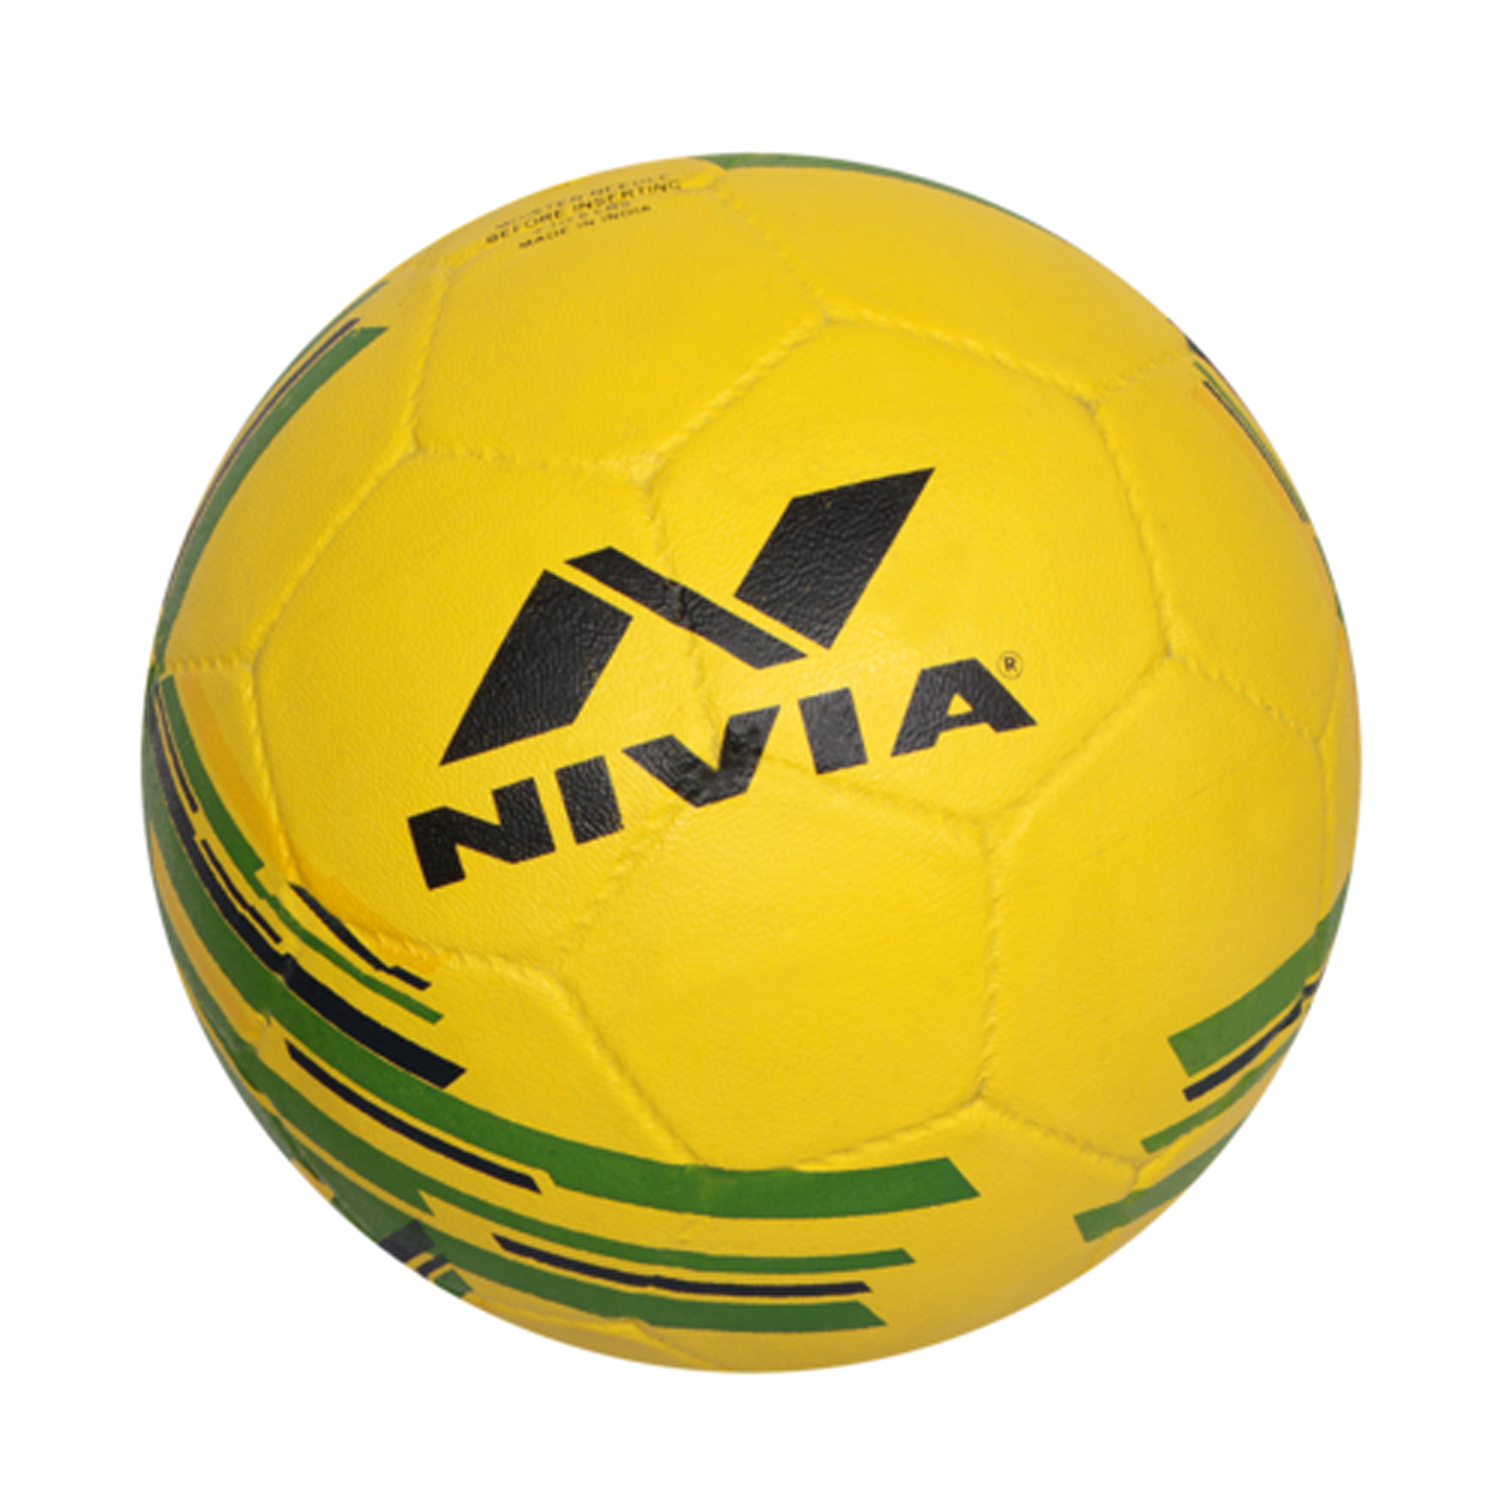 Nivia Brasil Country Colour Football, Yellow - Size 5 - Best Price online Prokicksports.com